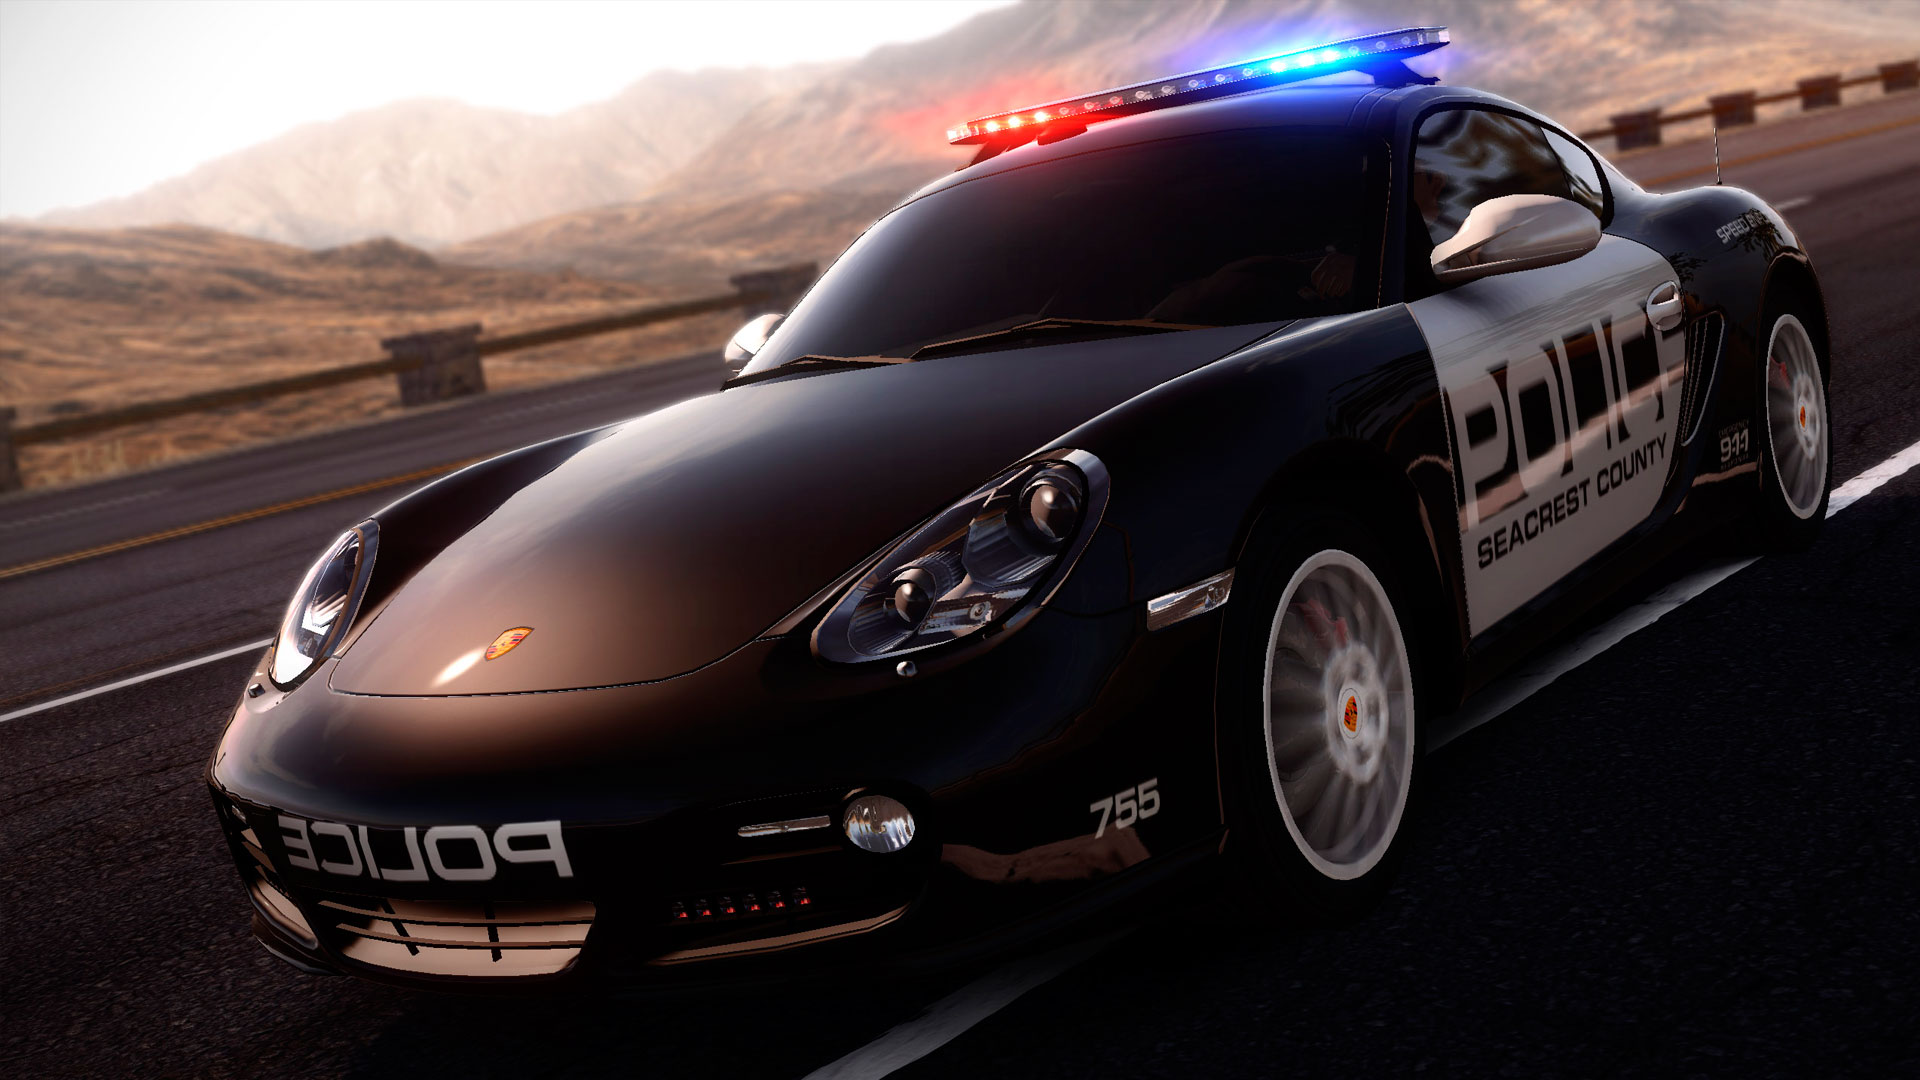 Police Car HD Desktop Image Wallpaper